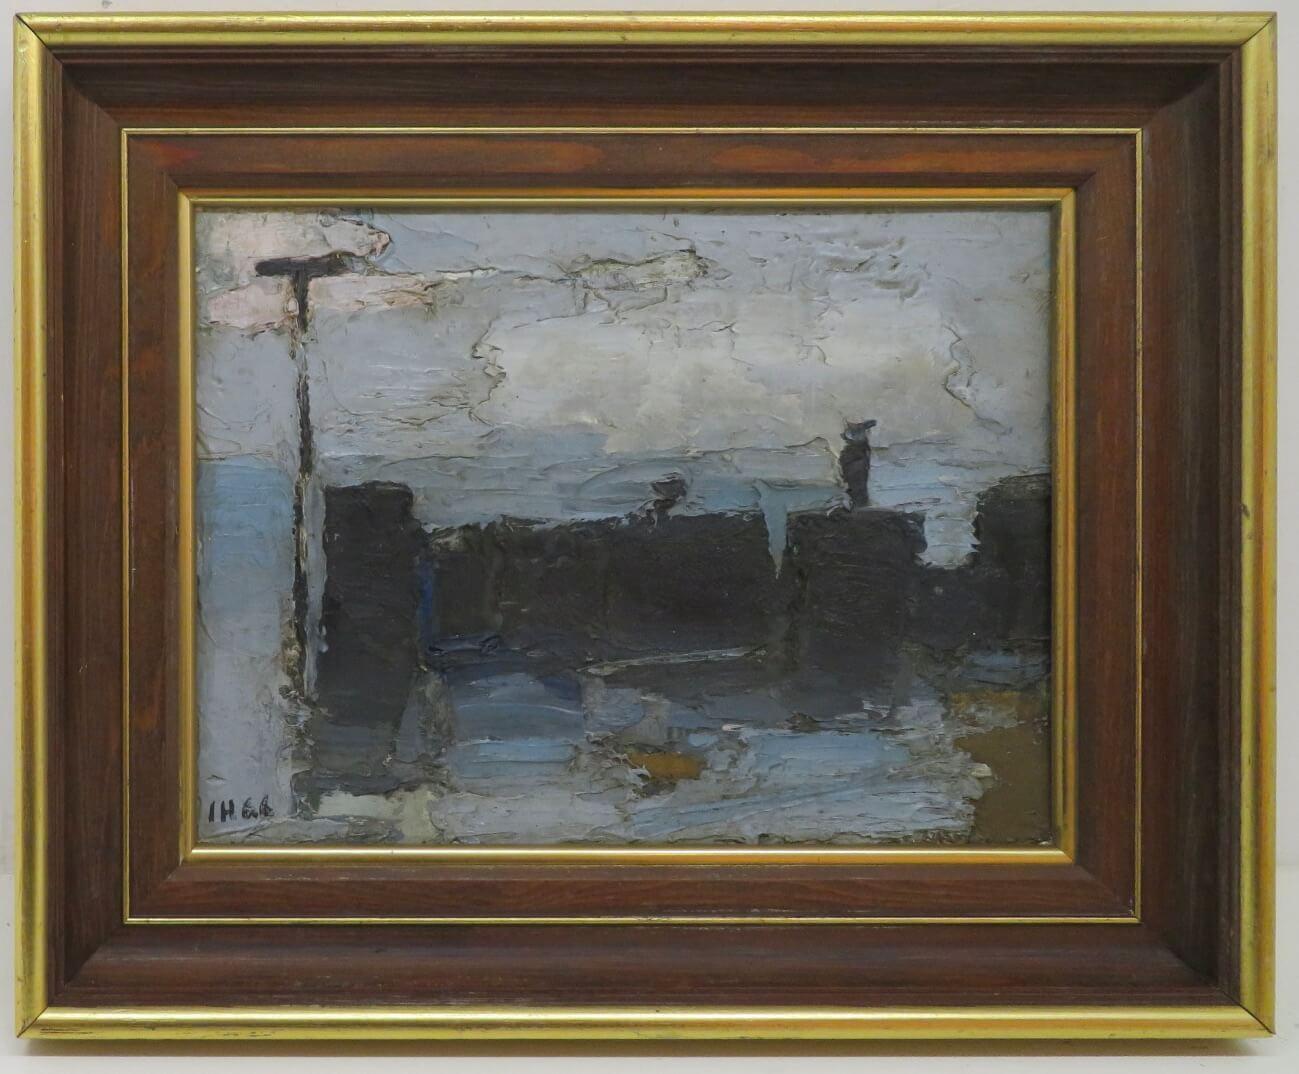 Ian Hay Landscape Painting - 1970's English Post Impressionist impasto oil painting BEACH SCENE ESSEX signed